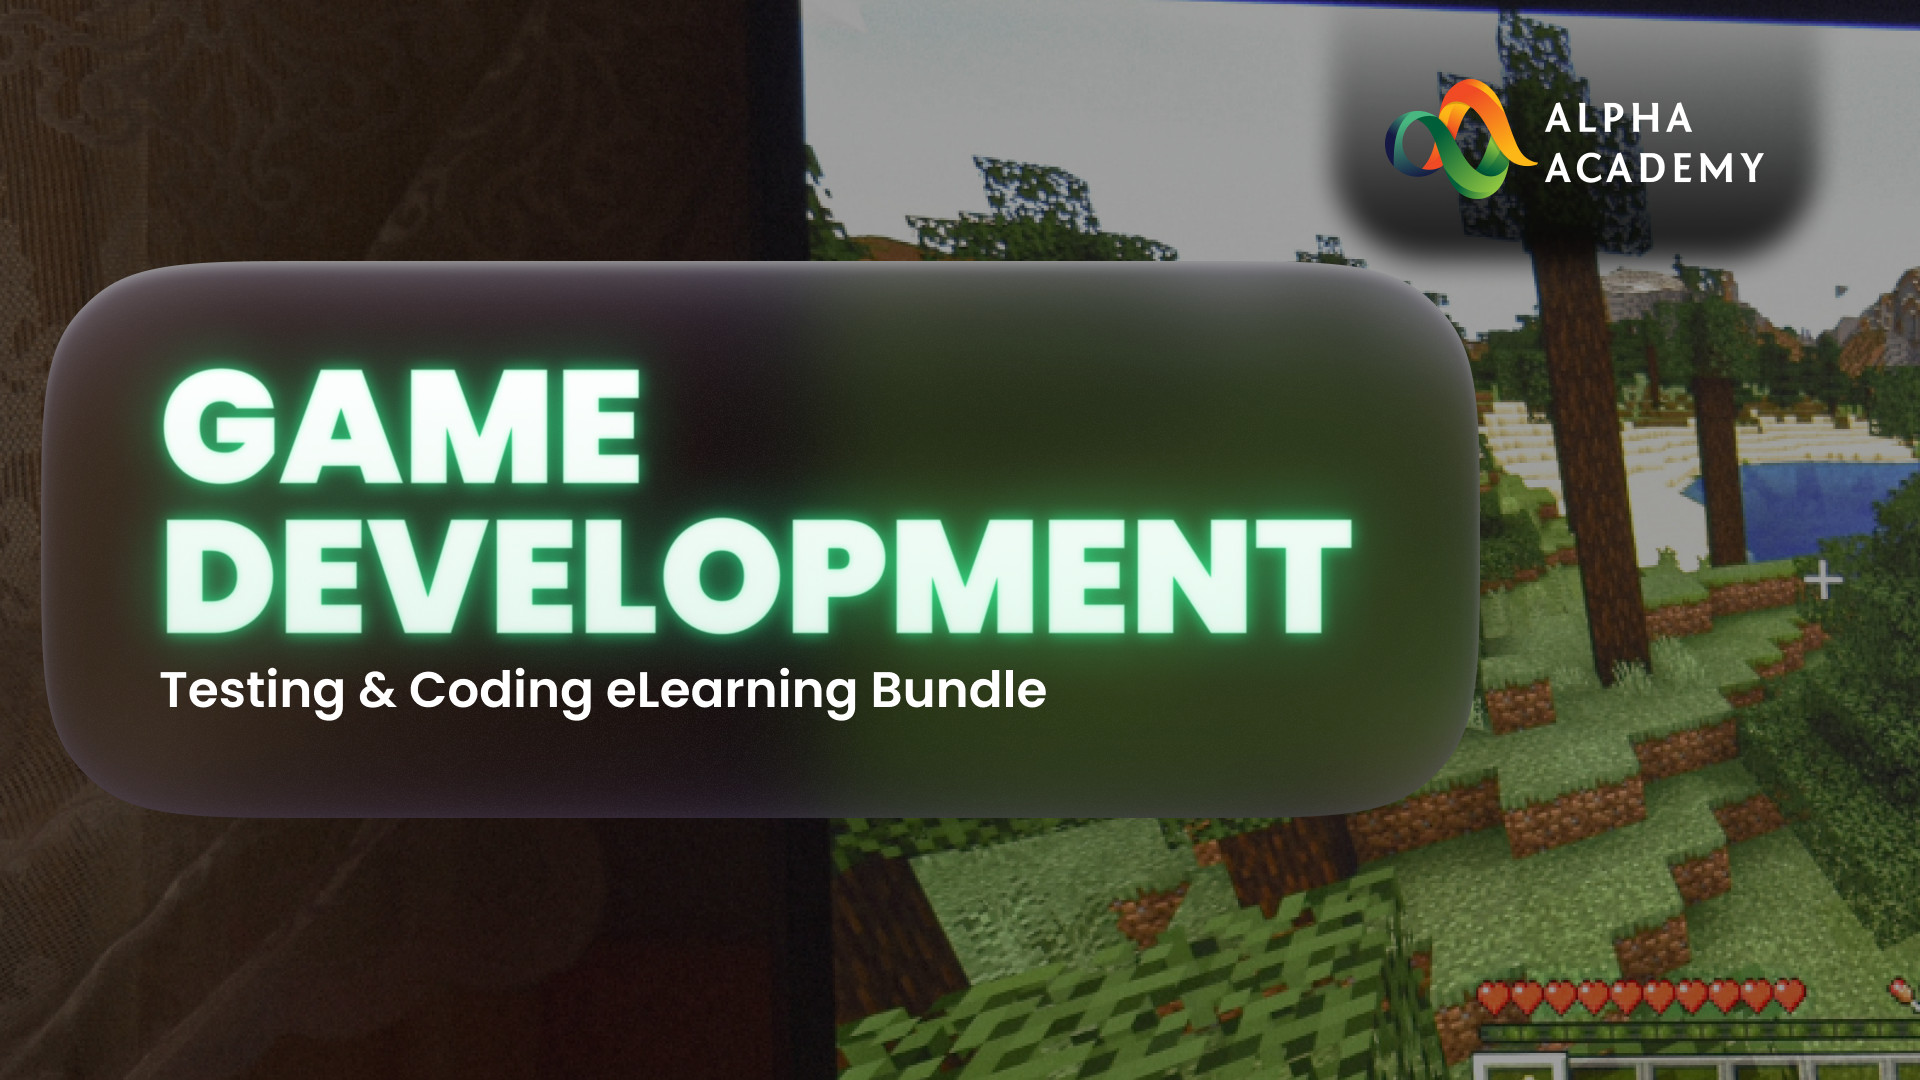 Game Development, Testing & Coding eLearning Bundle Alpha Academy Code 10.19 usd